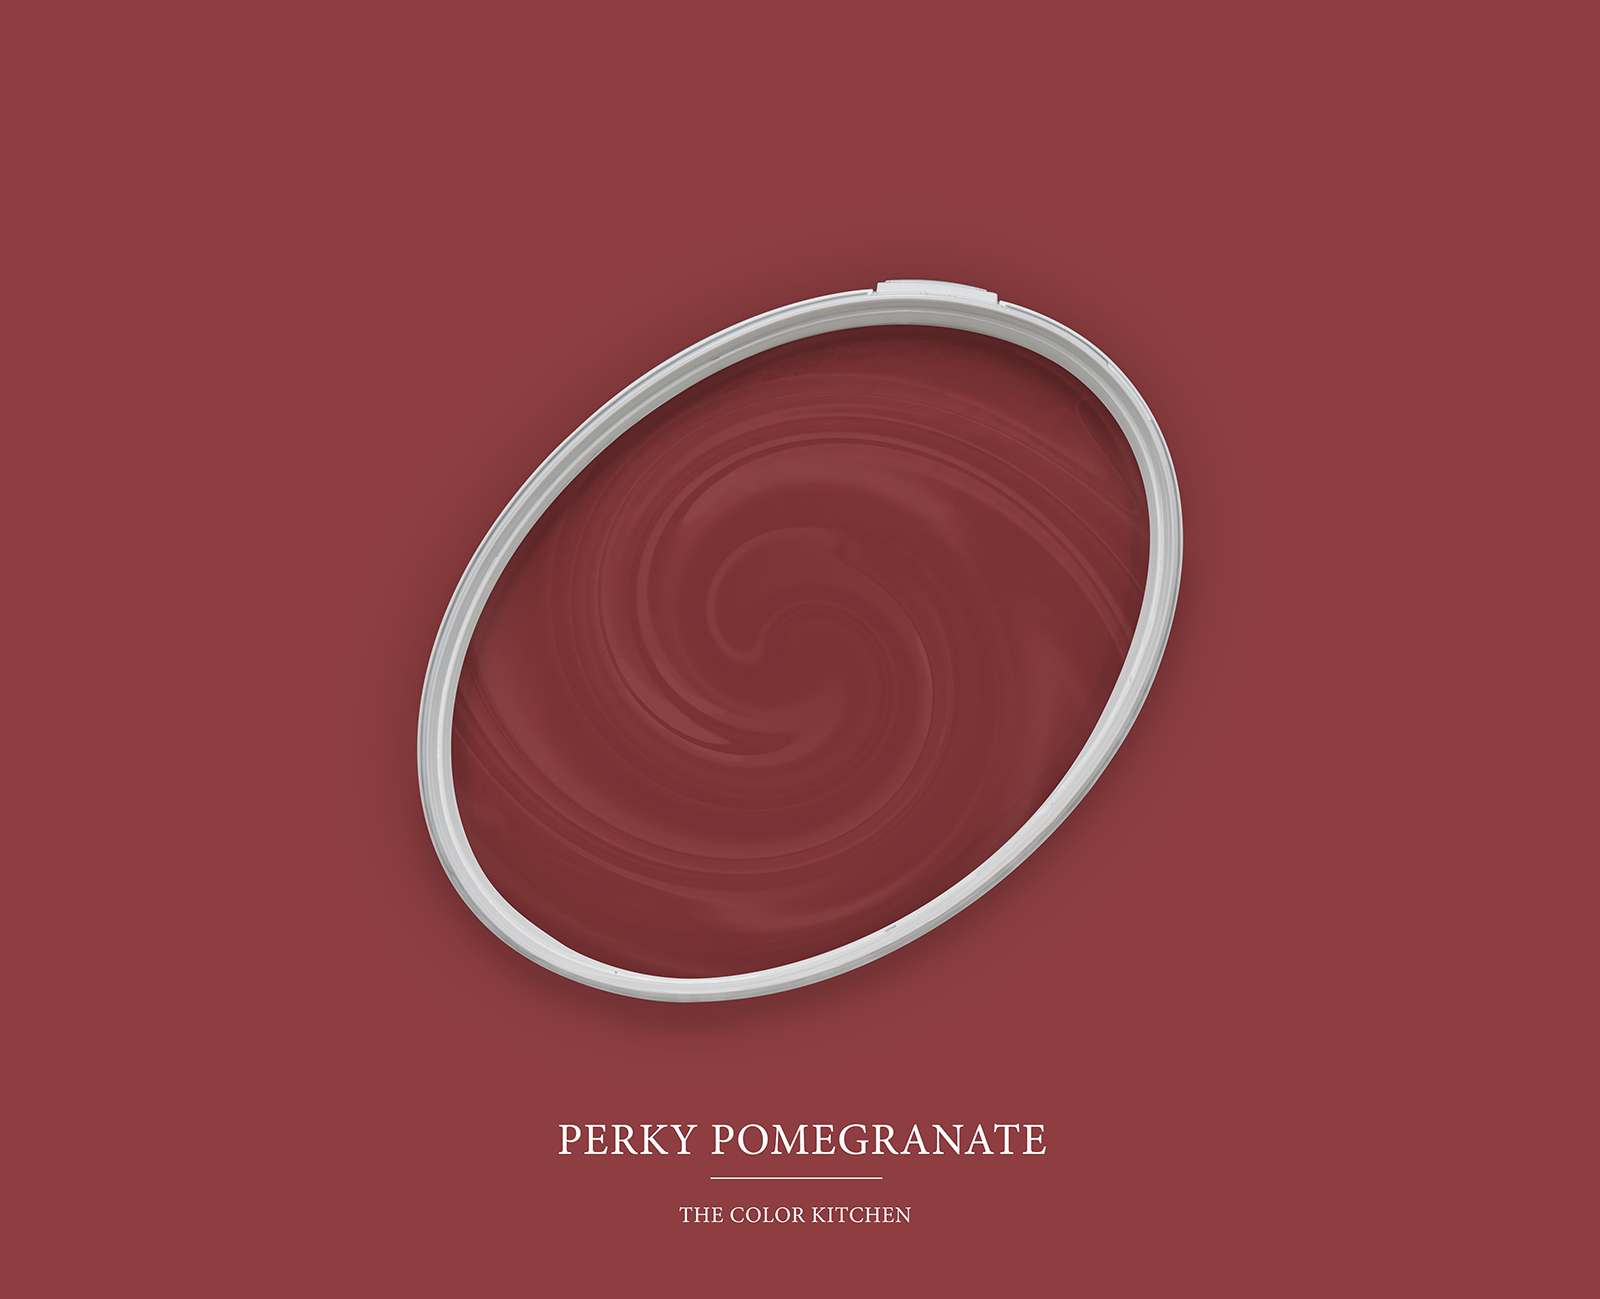         Wandfarbe in leidenschaftlichem Dunkelrot »Perky Pomegranate« TCK7006 – 2,5 Liter
    